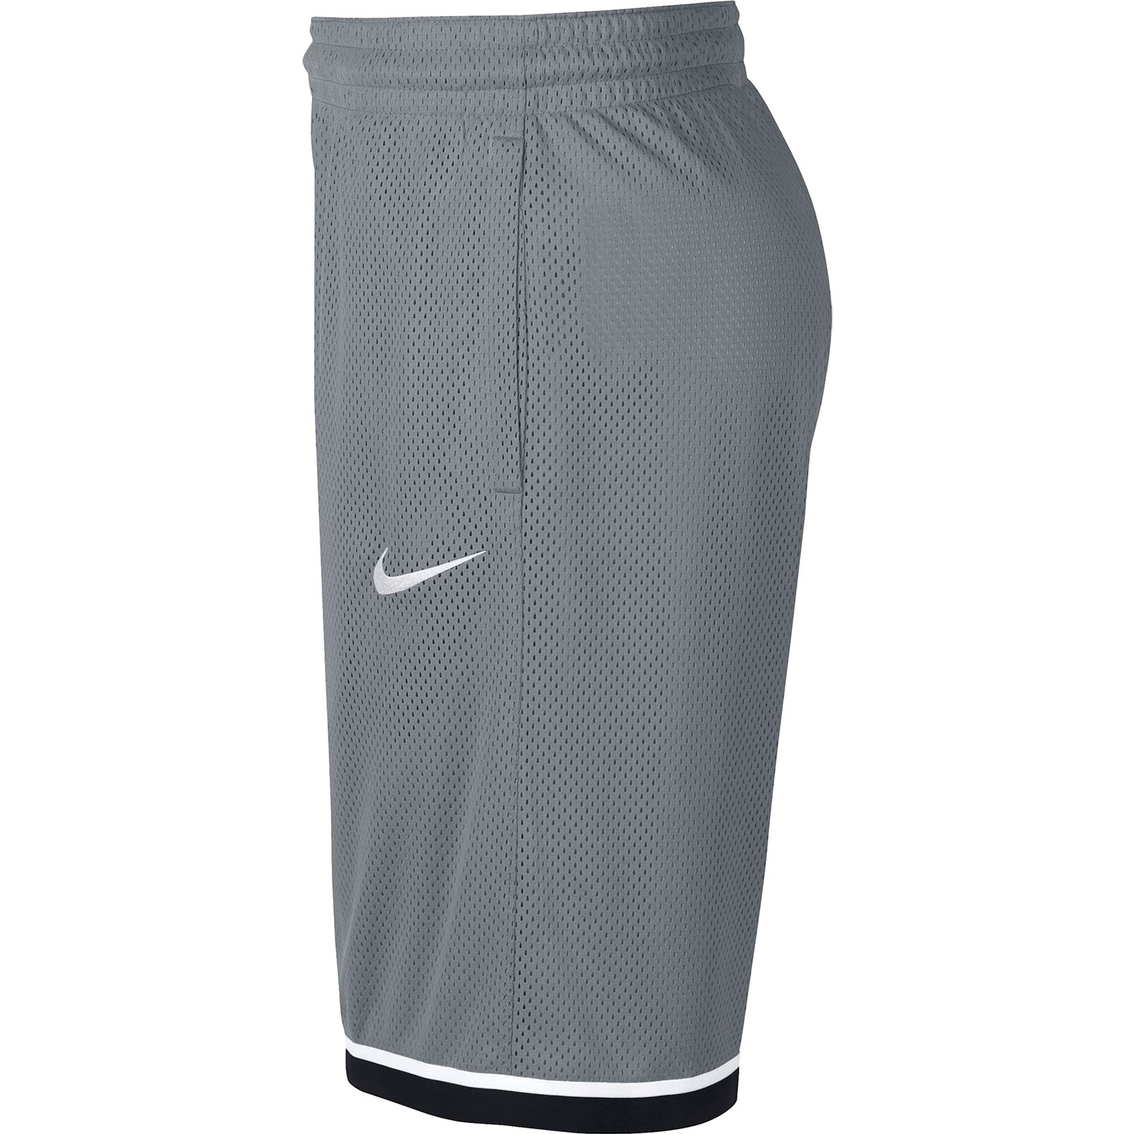 Nike Dry Classic Basketball Shorts - Image 3 of 3